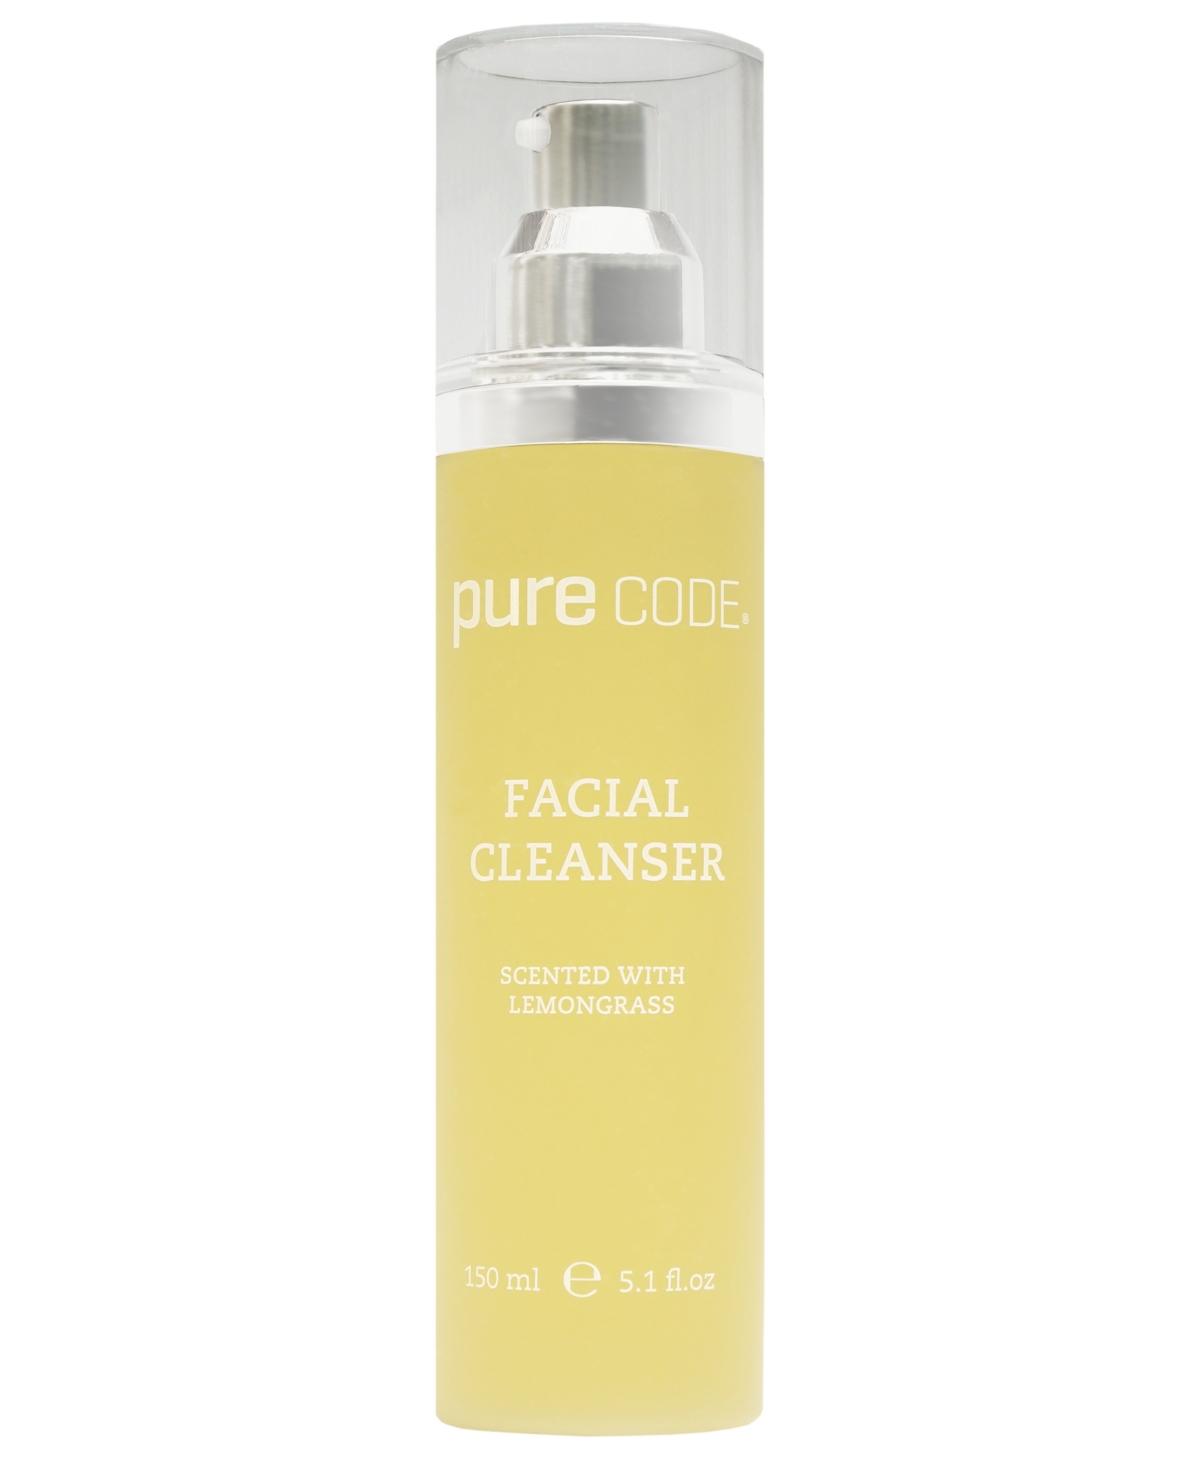 Facial Cleanser With Lemongrass, 150 ml - Light Yell